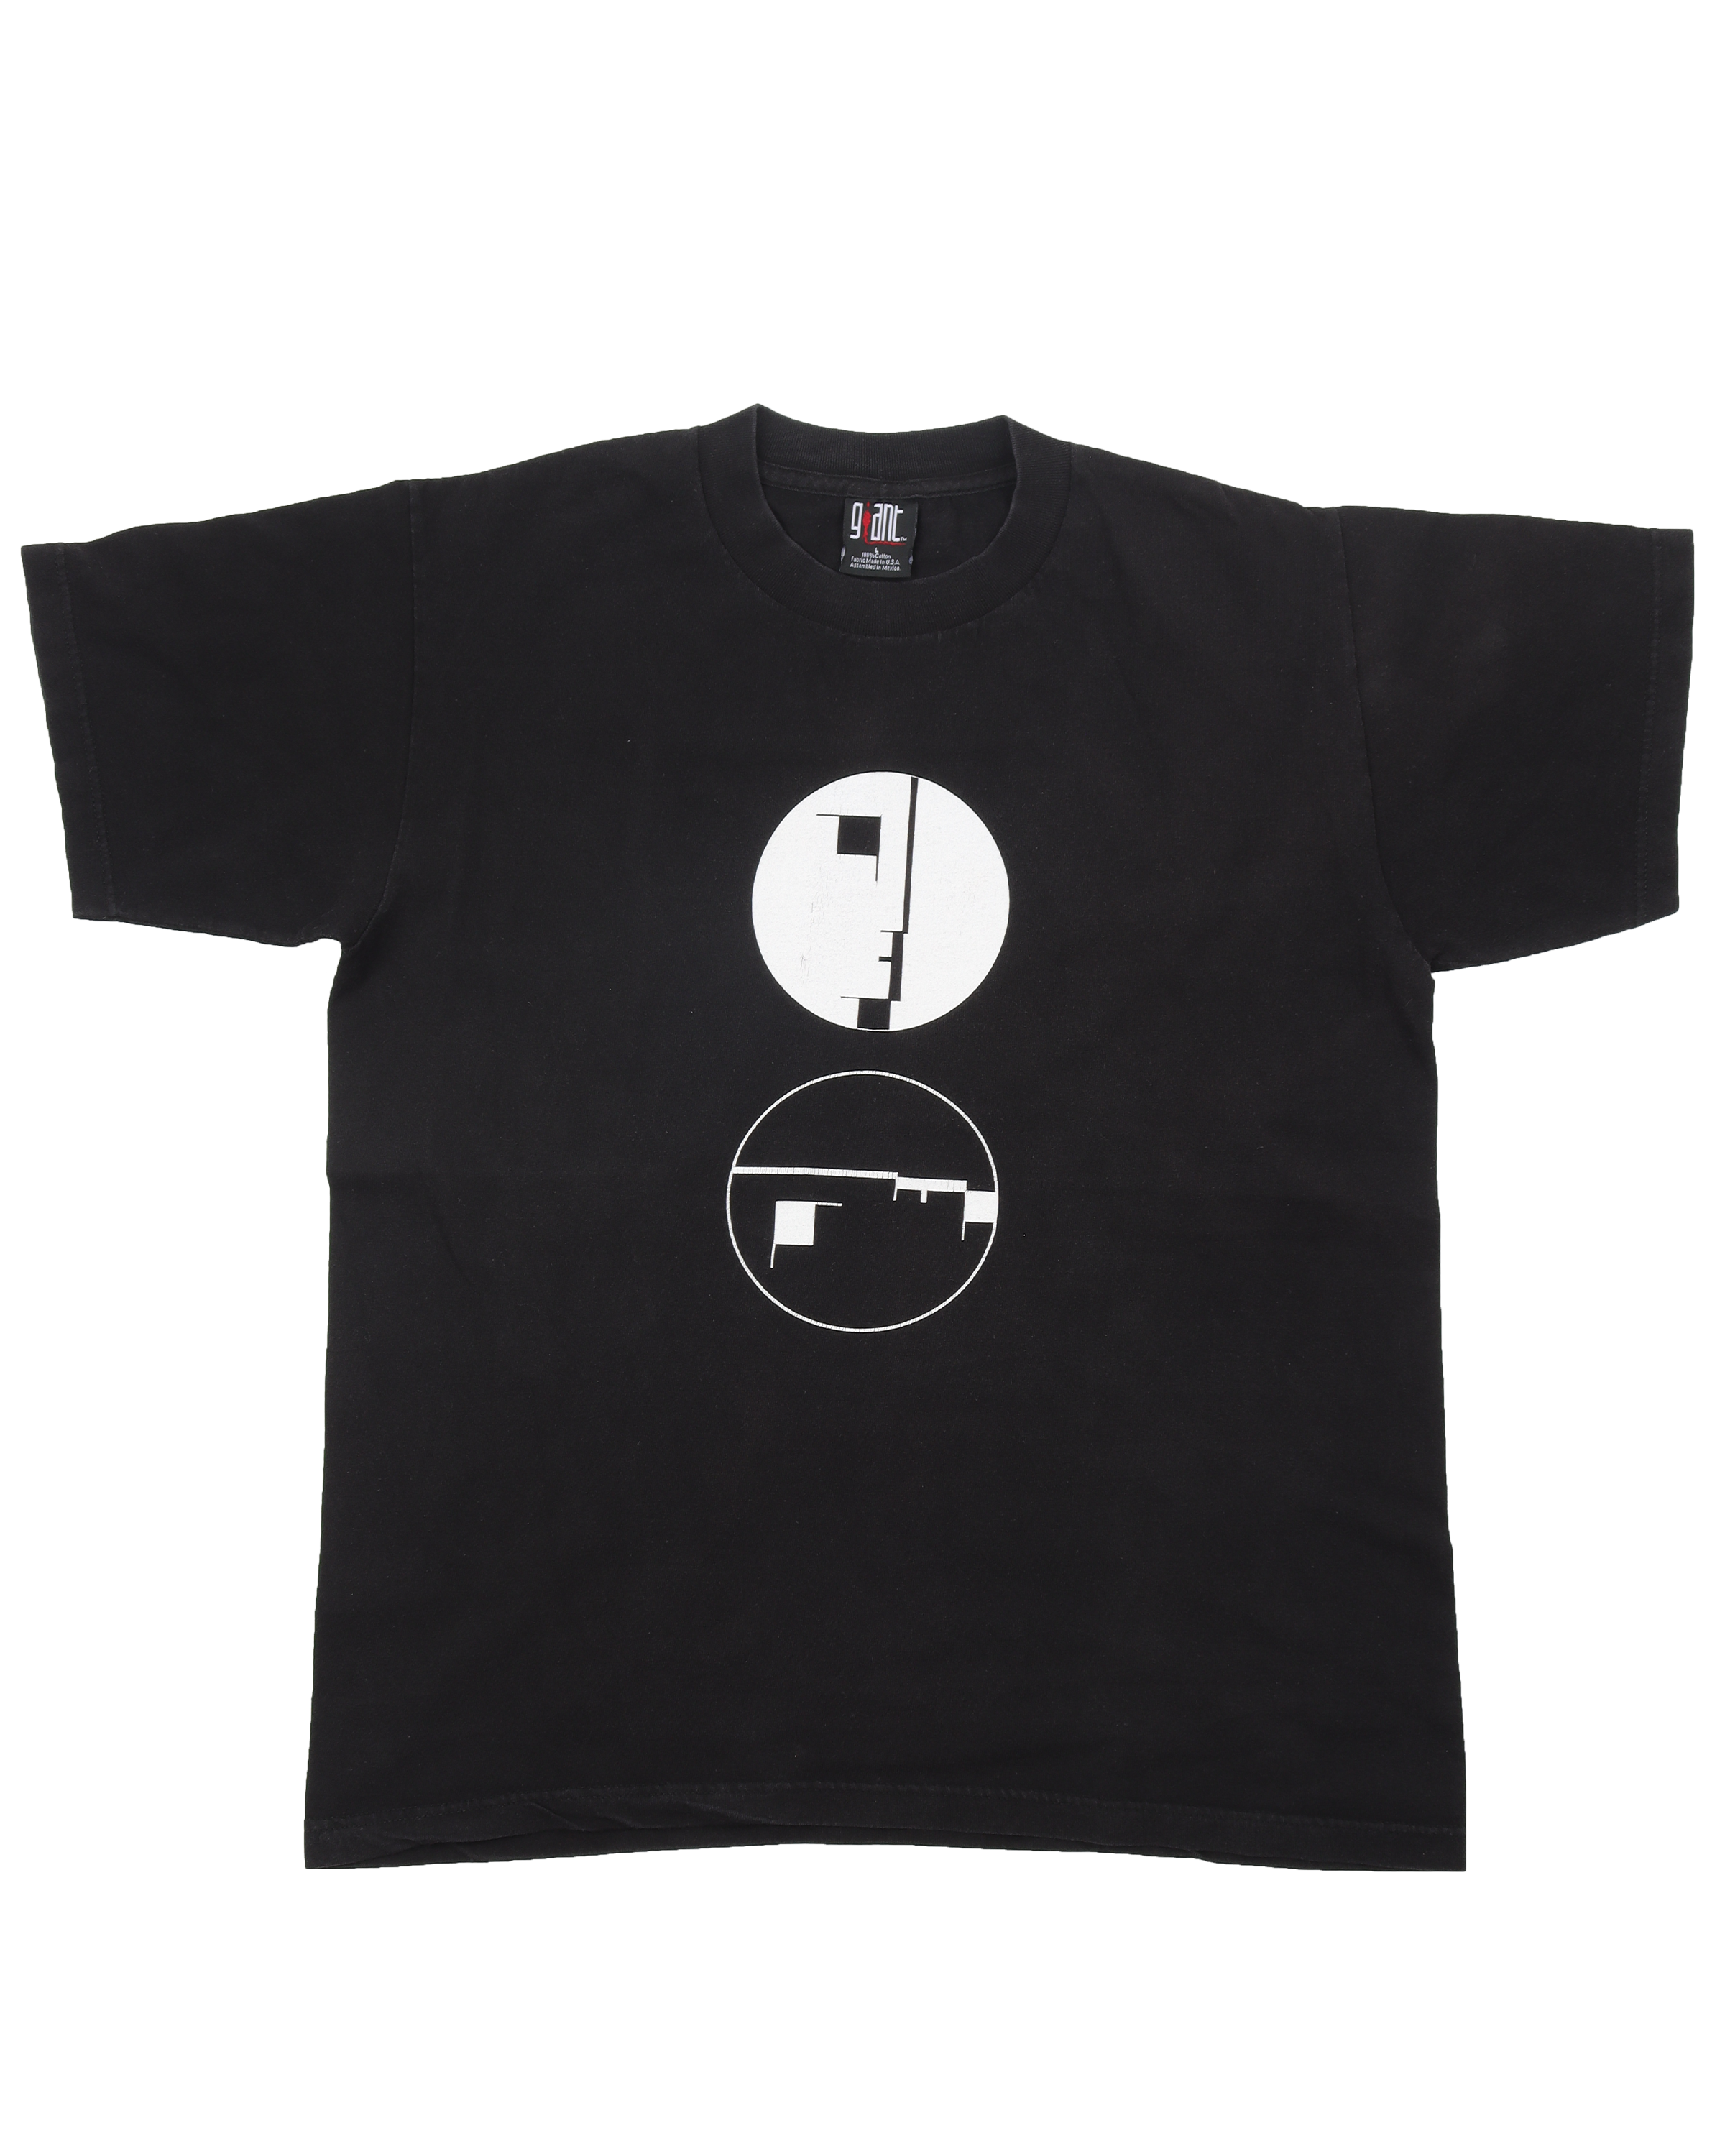 1998 Bauhaus Resurrection T-Shirt